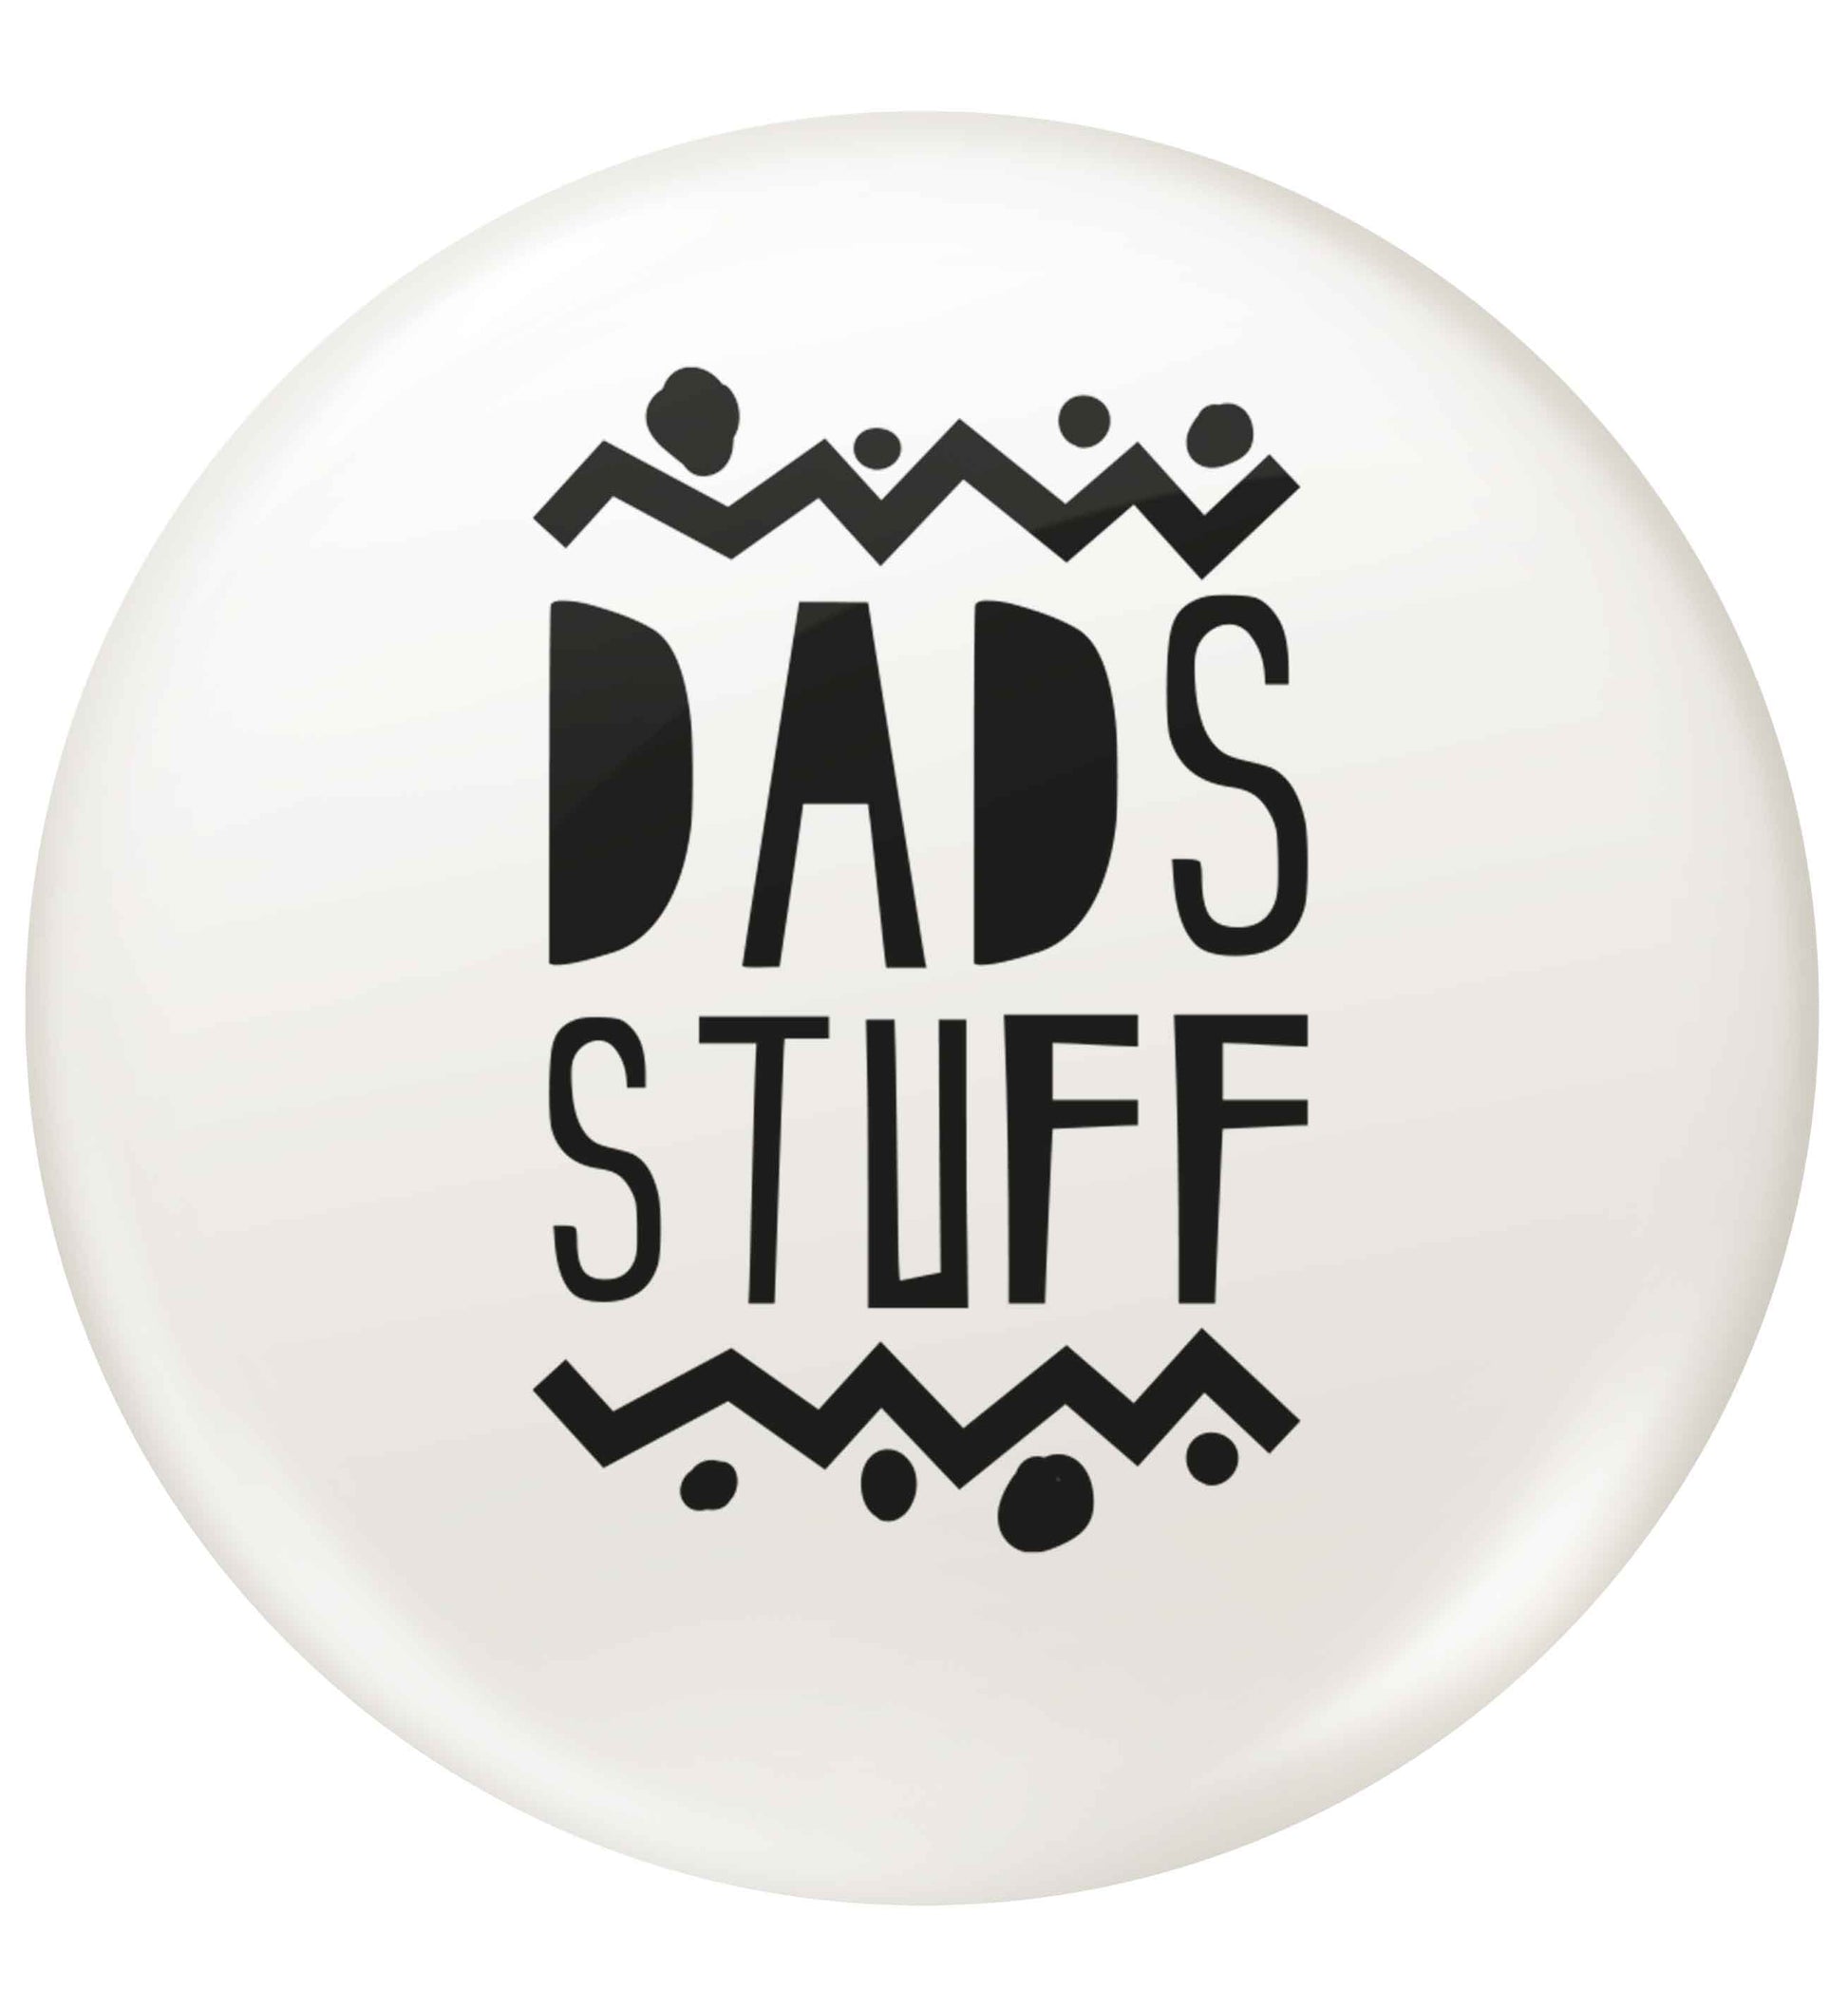 Dads stuff small 25mm Pin badge